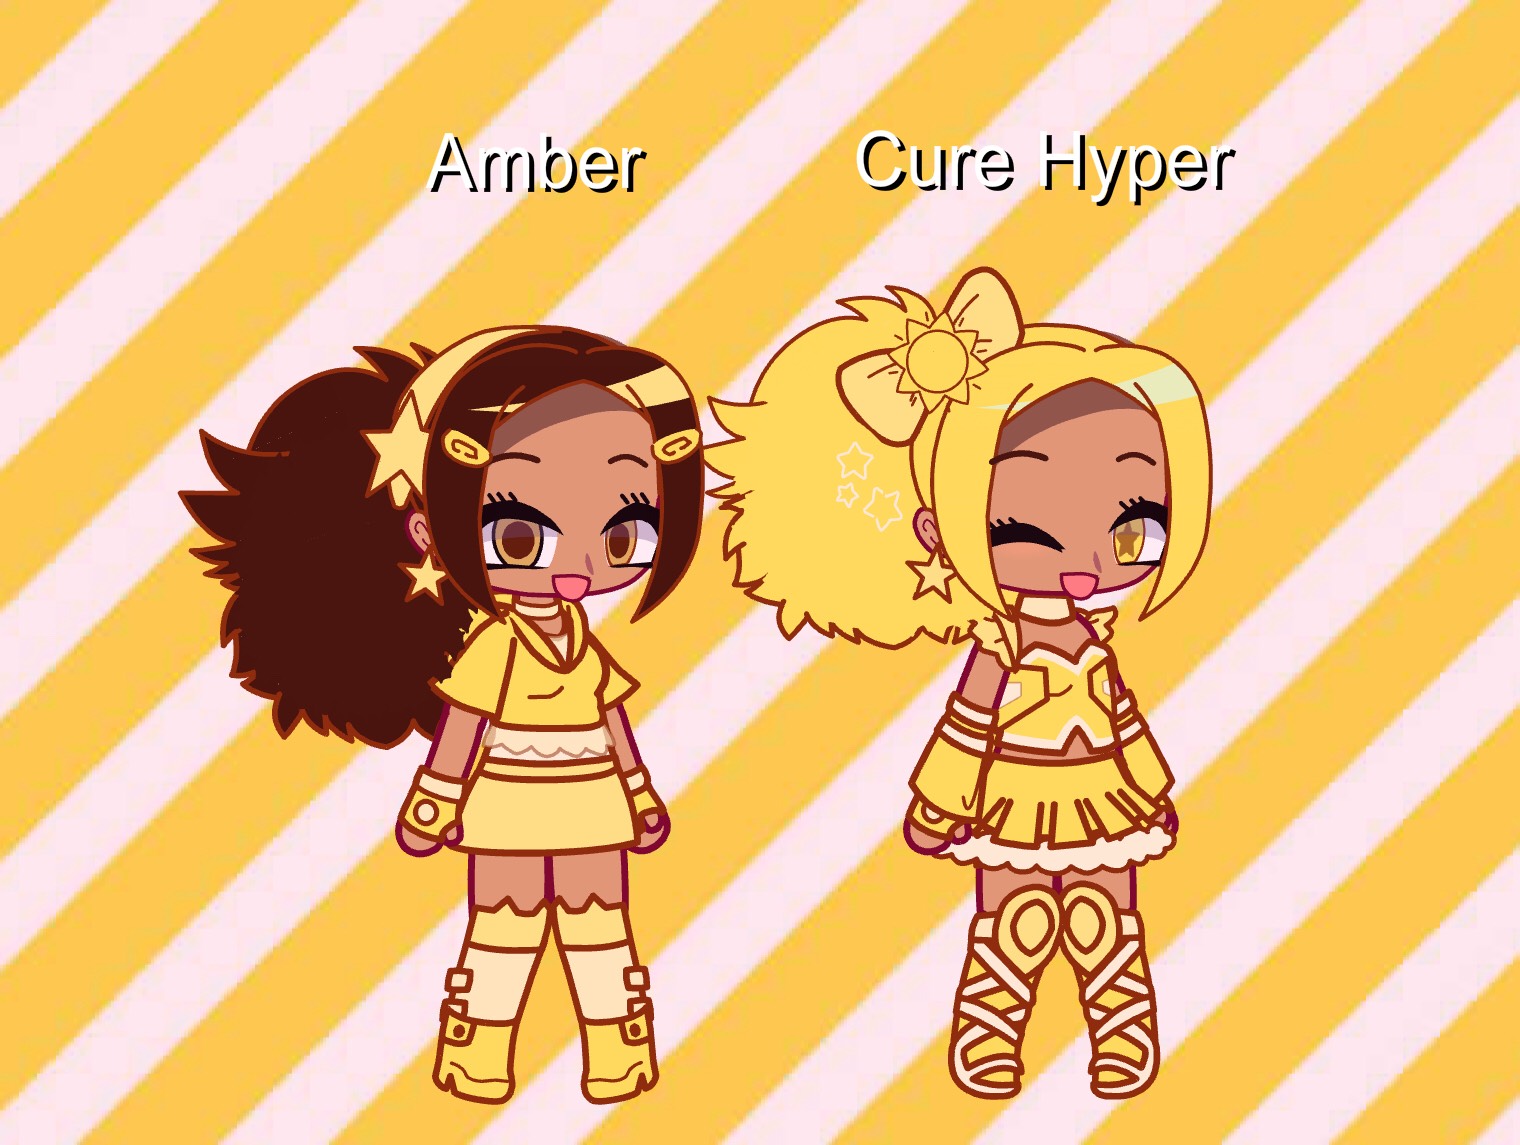 Planet Anime on Tumblr: Amber [Genshin Impact]